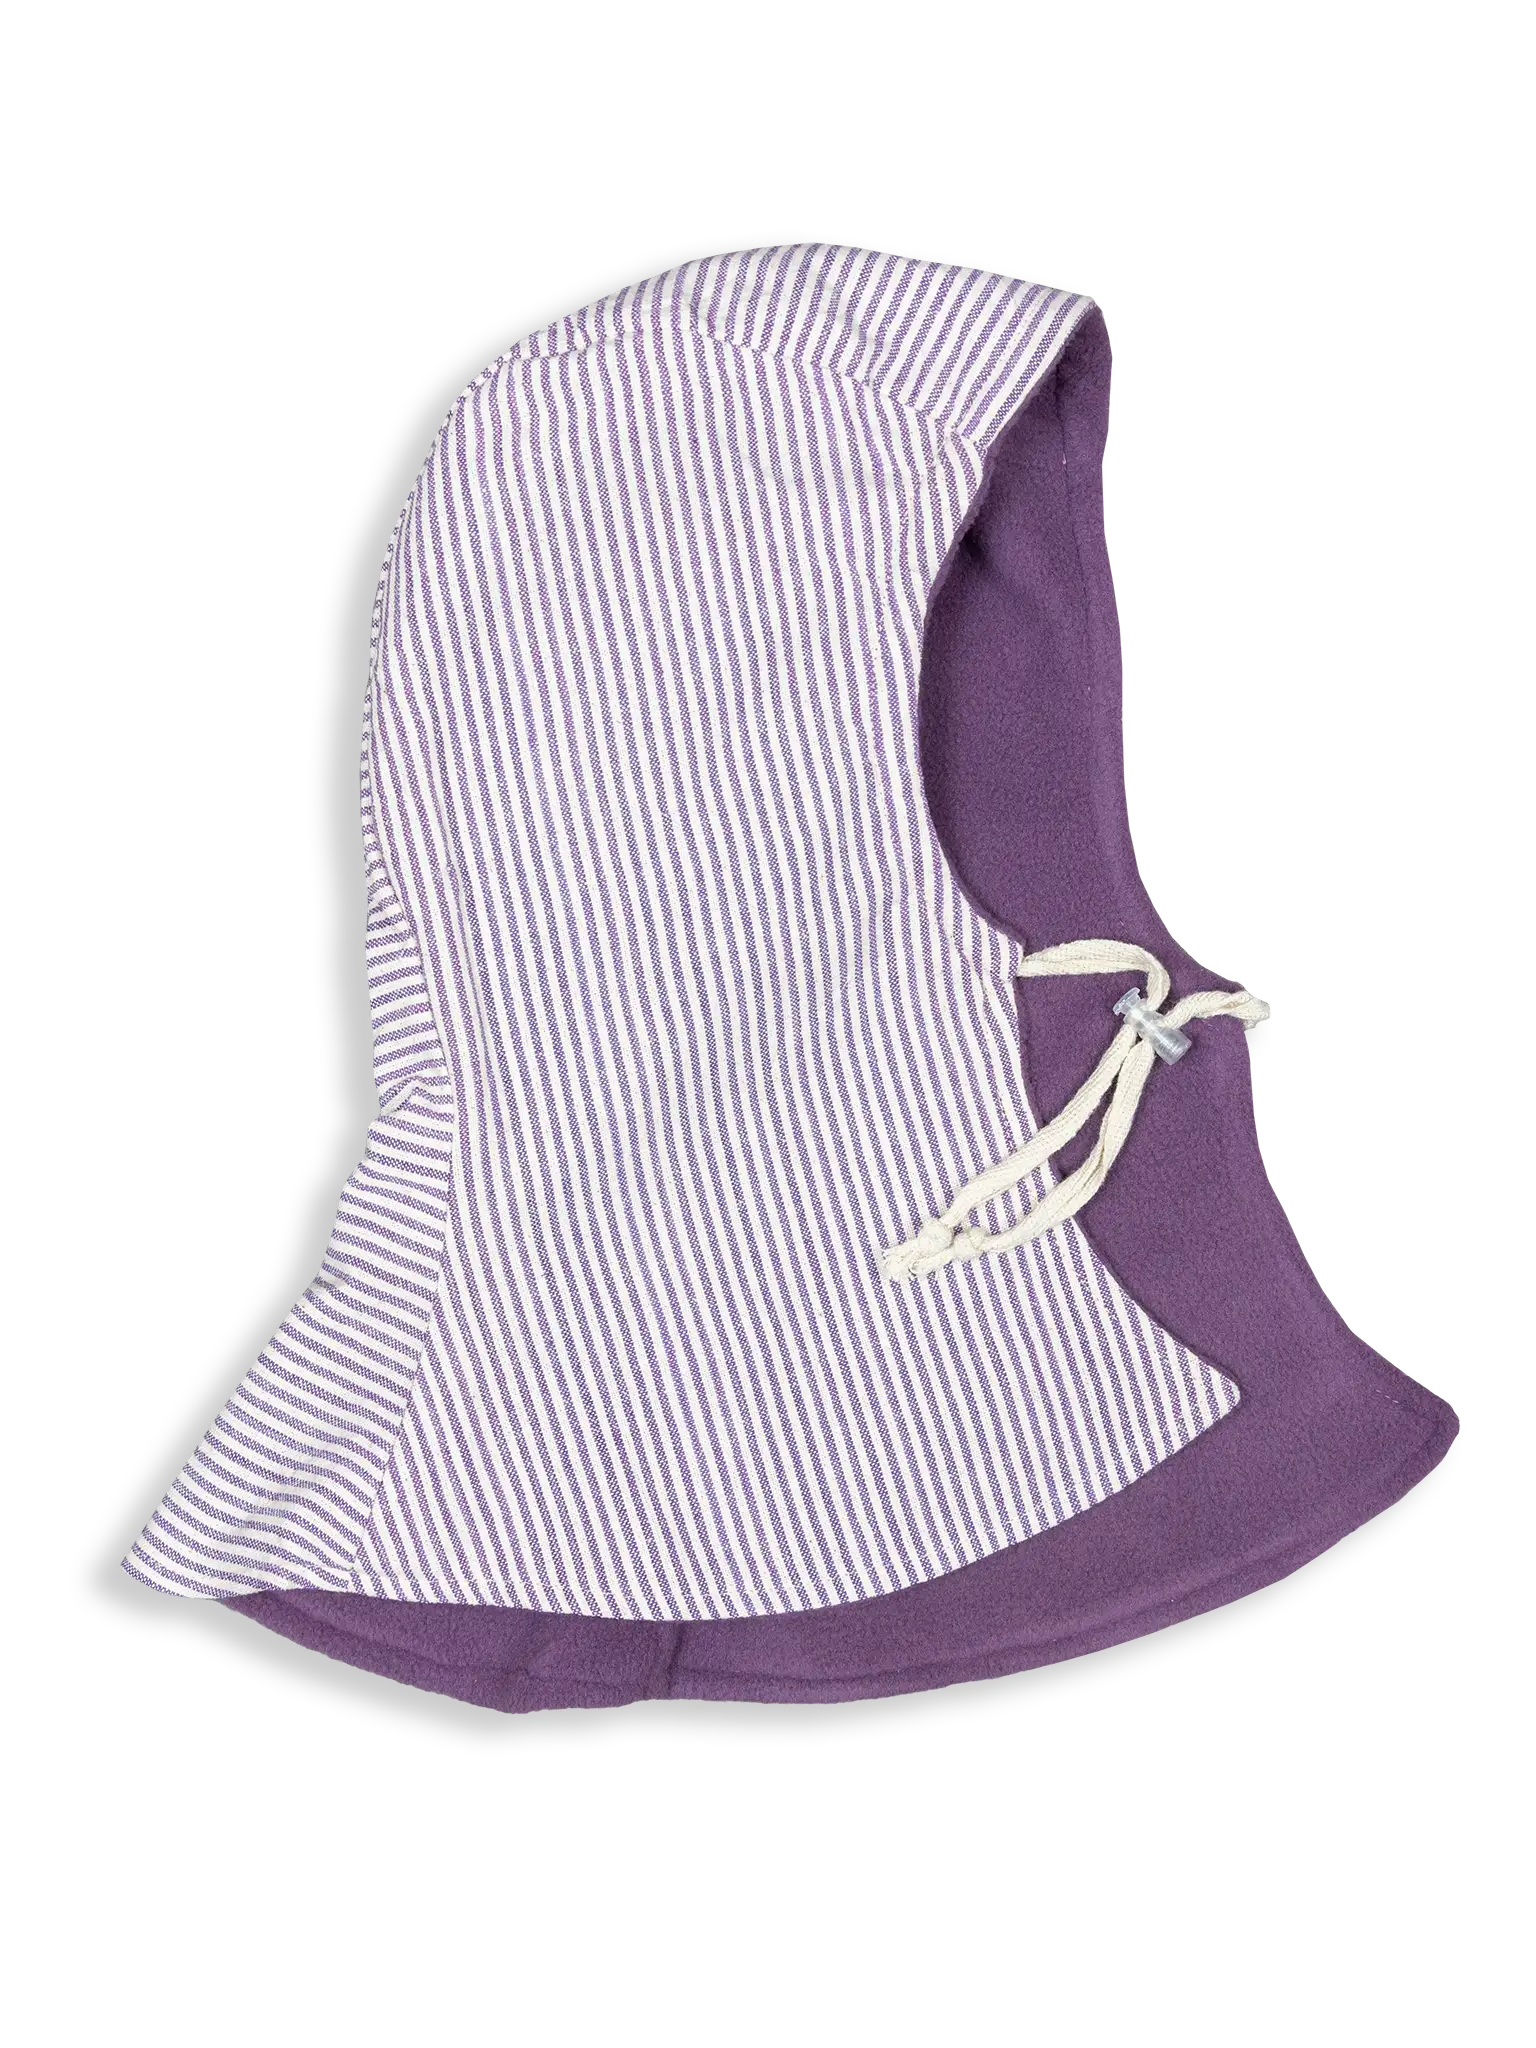 Balaclava Hat for Winter (18m-5y)